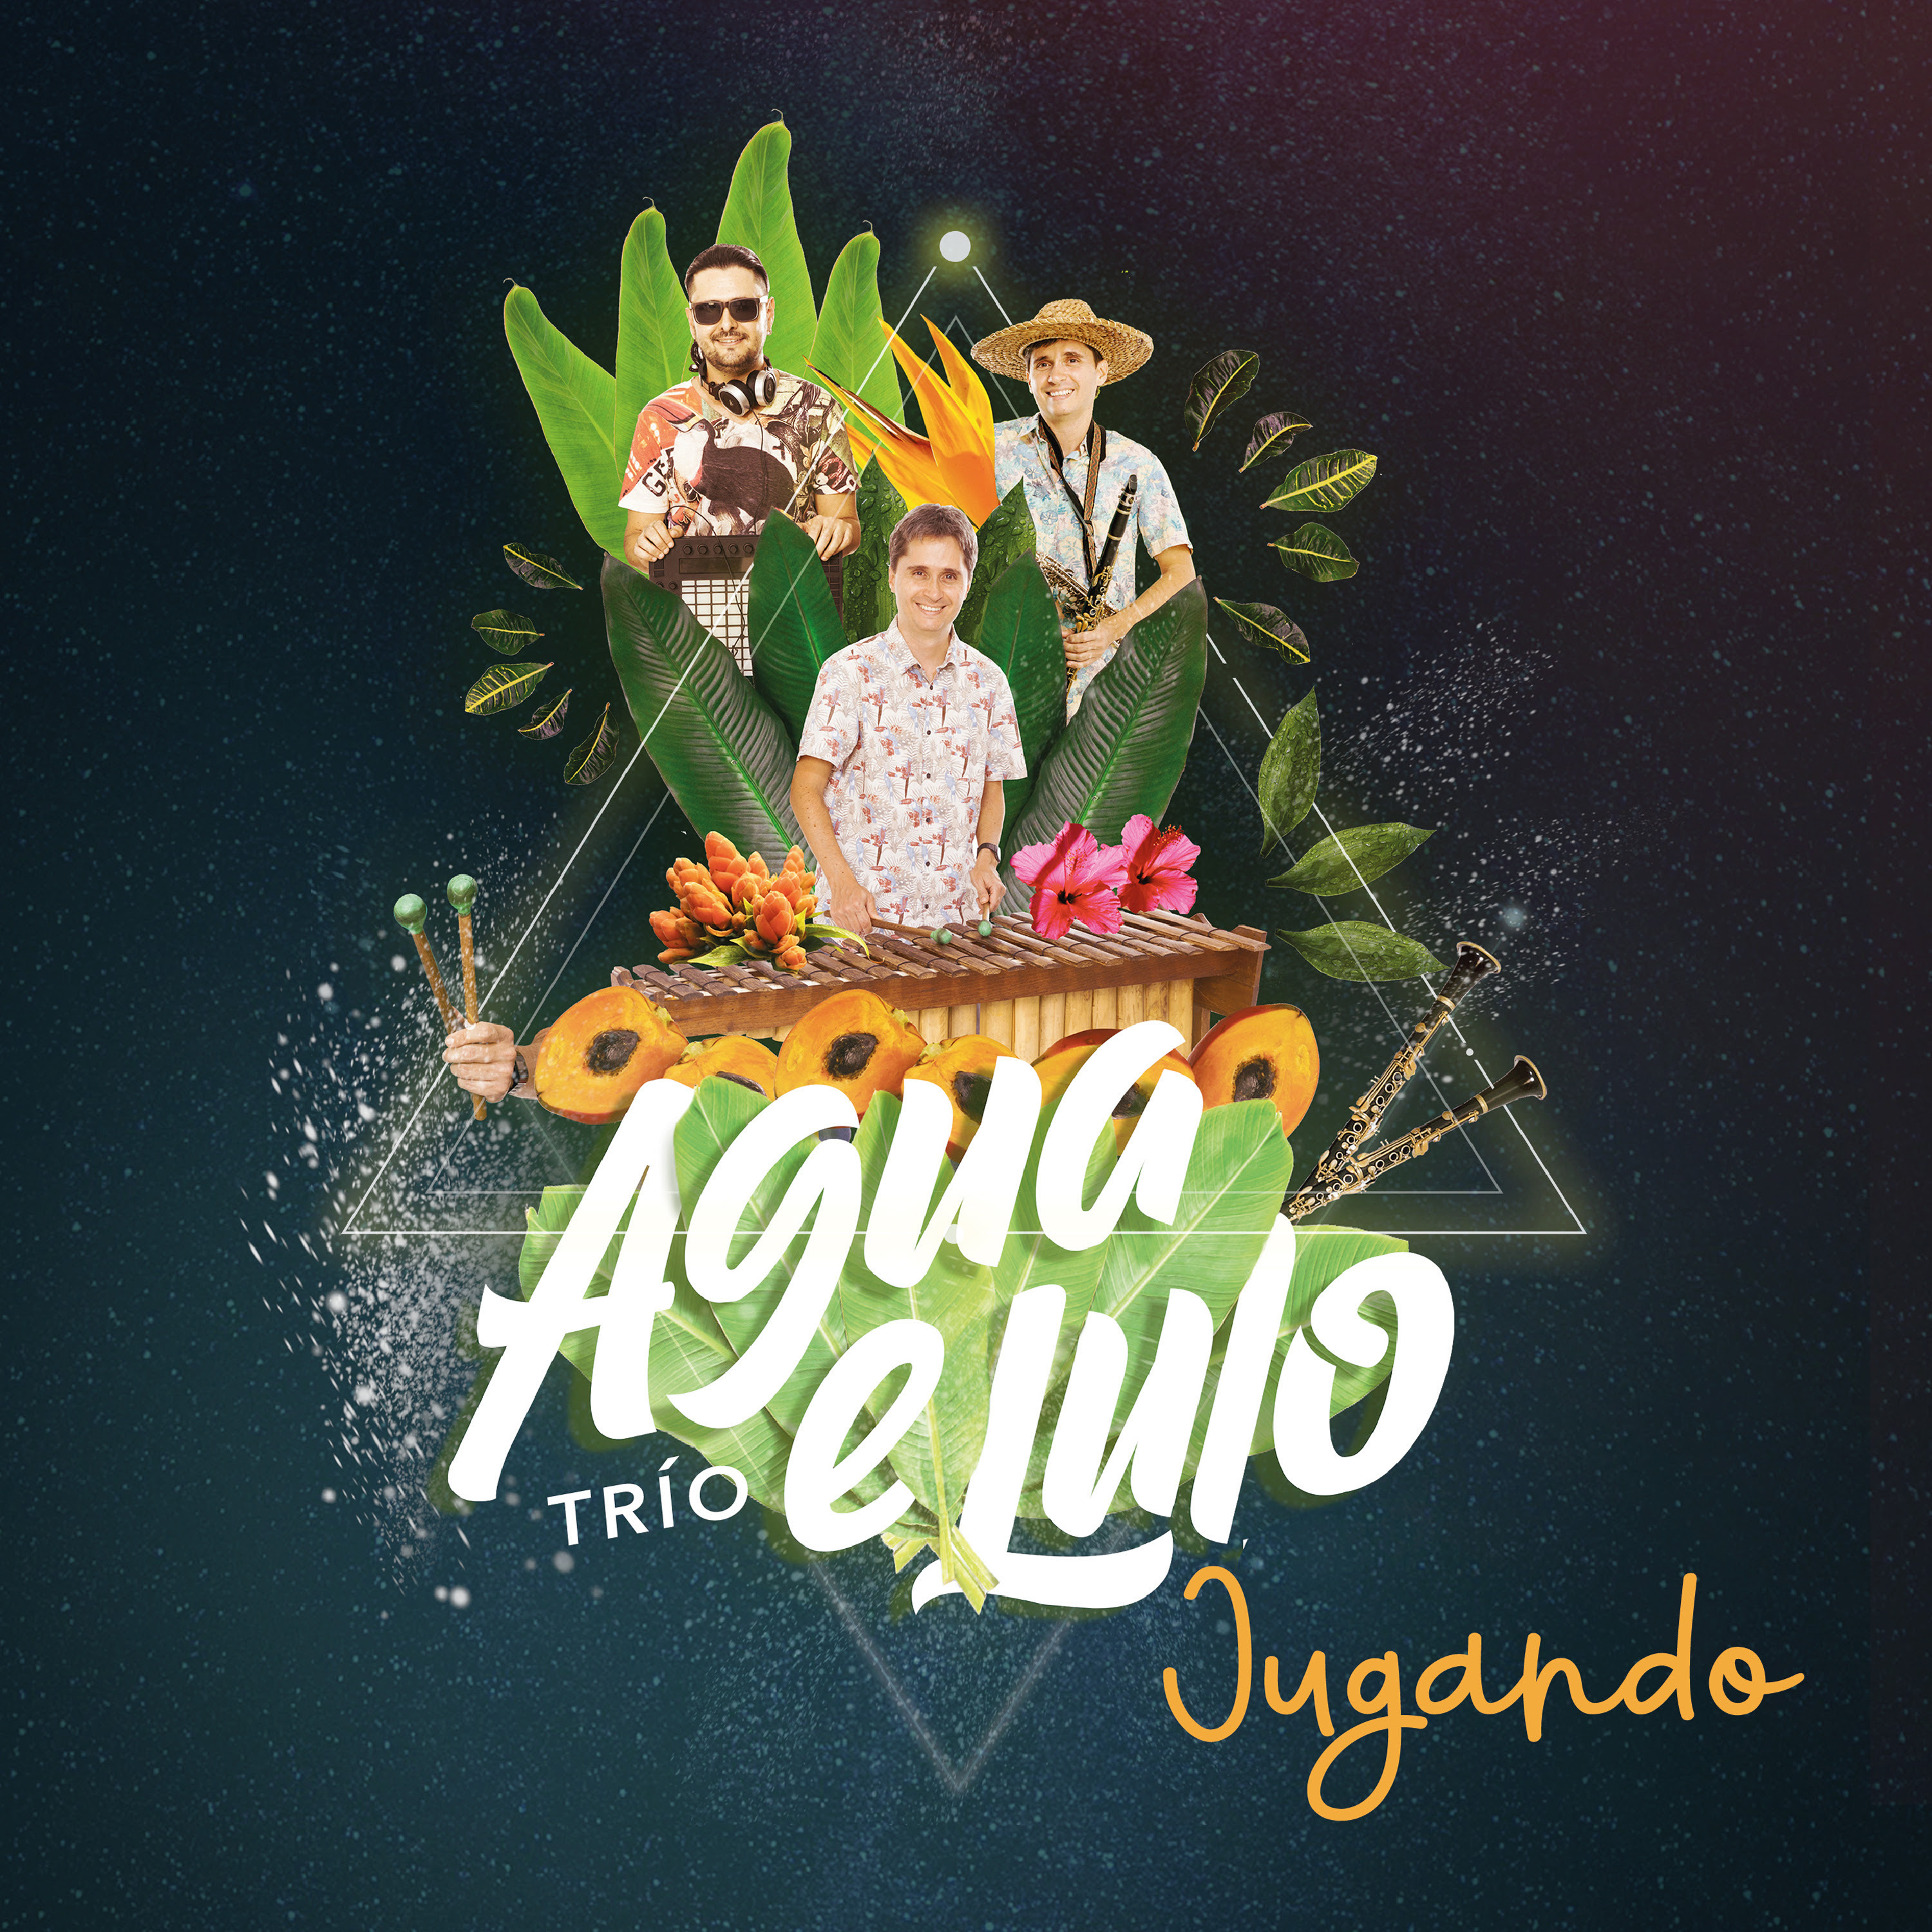 Jugando, con Aguaelulo trío – @Aguaelulotrio